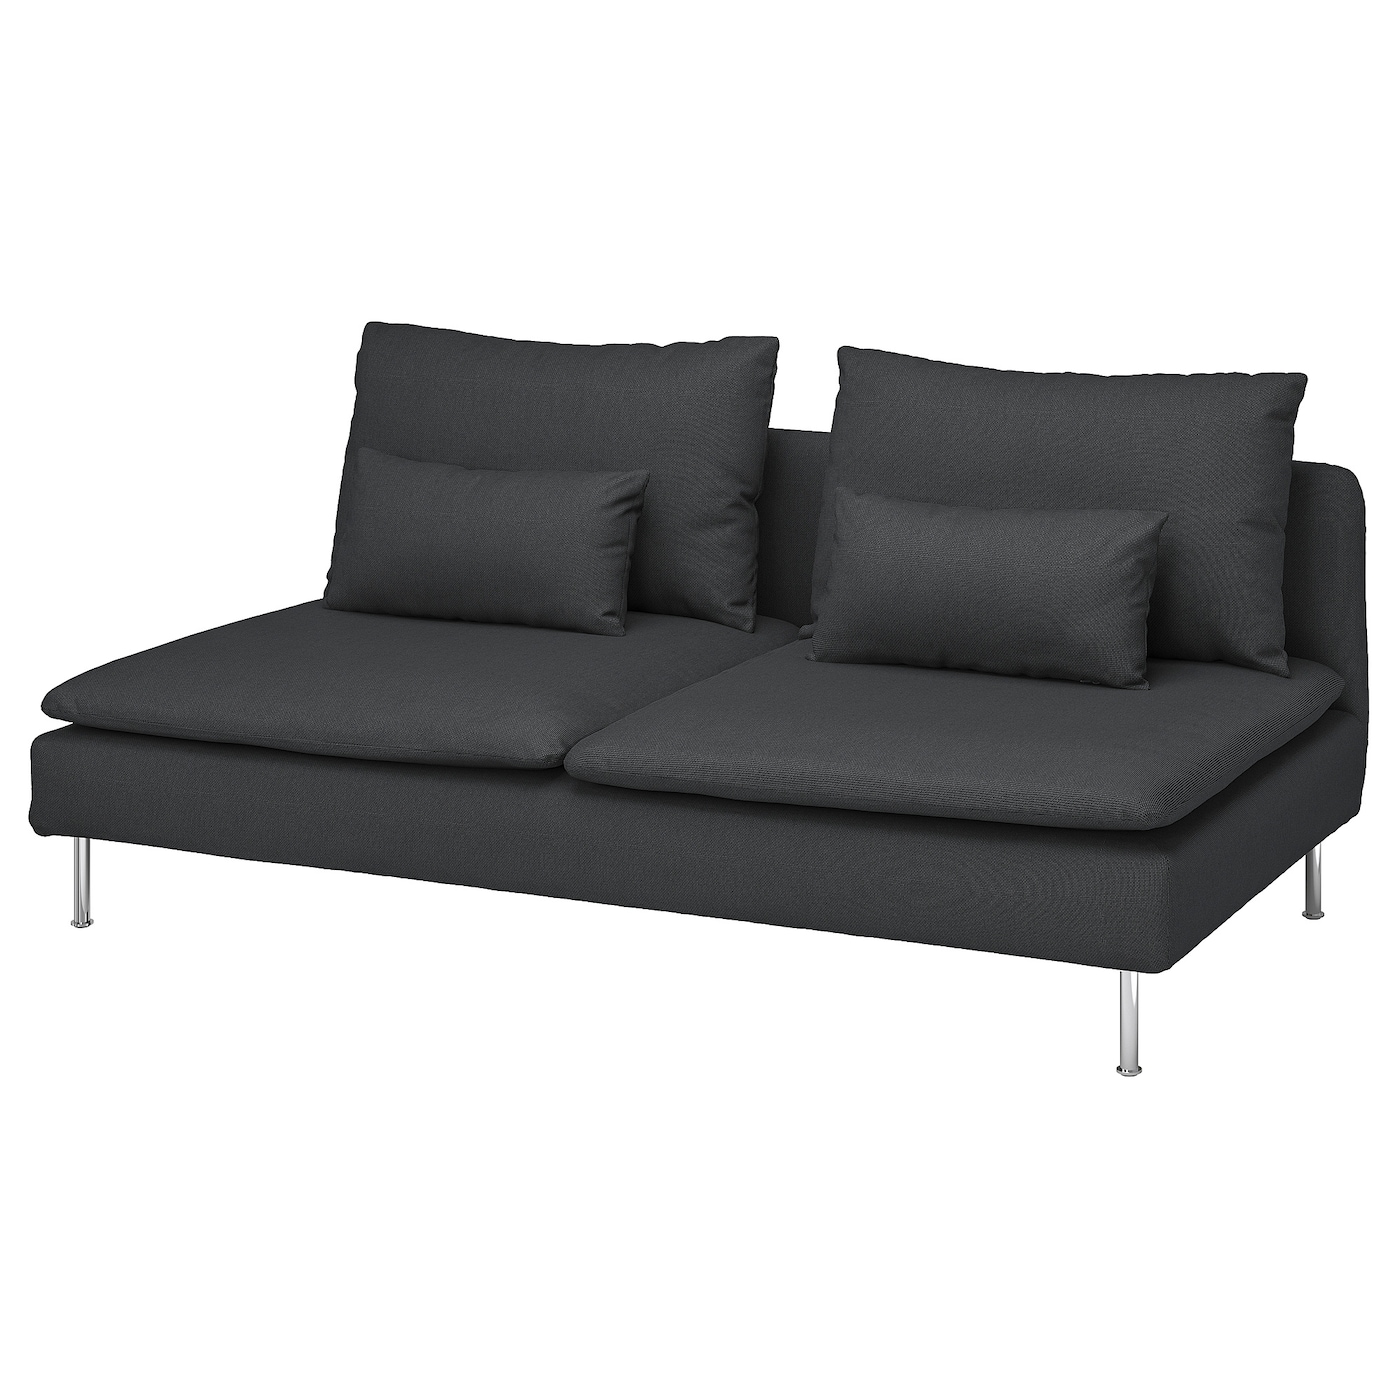 3-местный диван - IKEA SÖDERHAMN/SODERHAMN/СЁДЕРХАМН ИКЕА, 83х99х186 см, черный